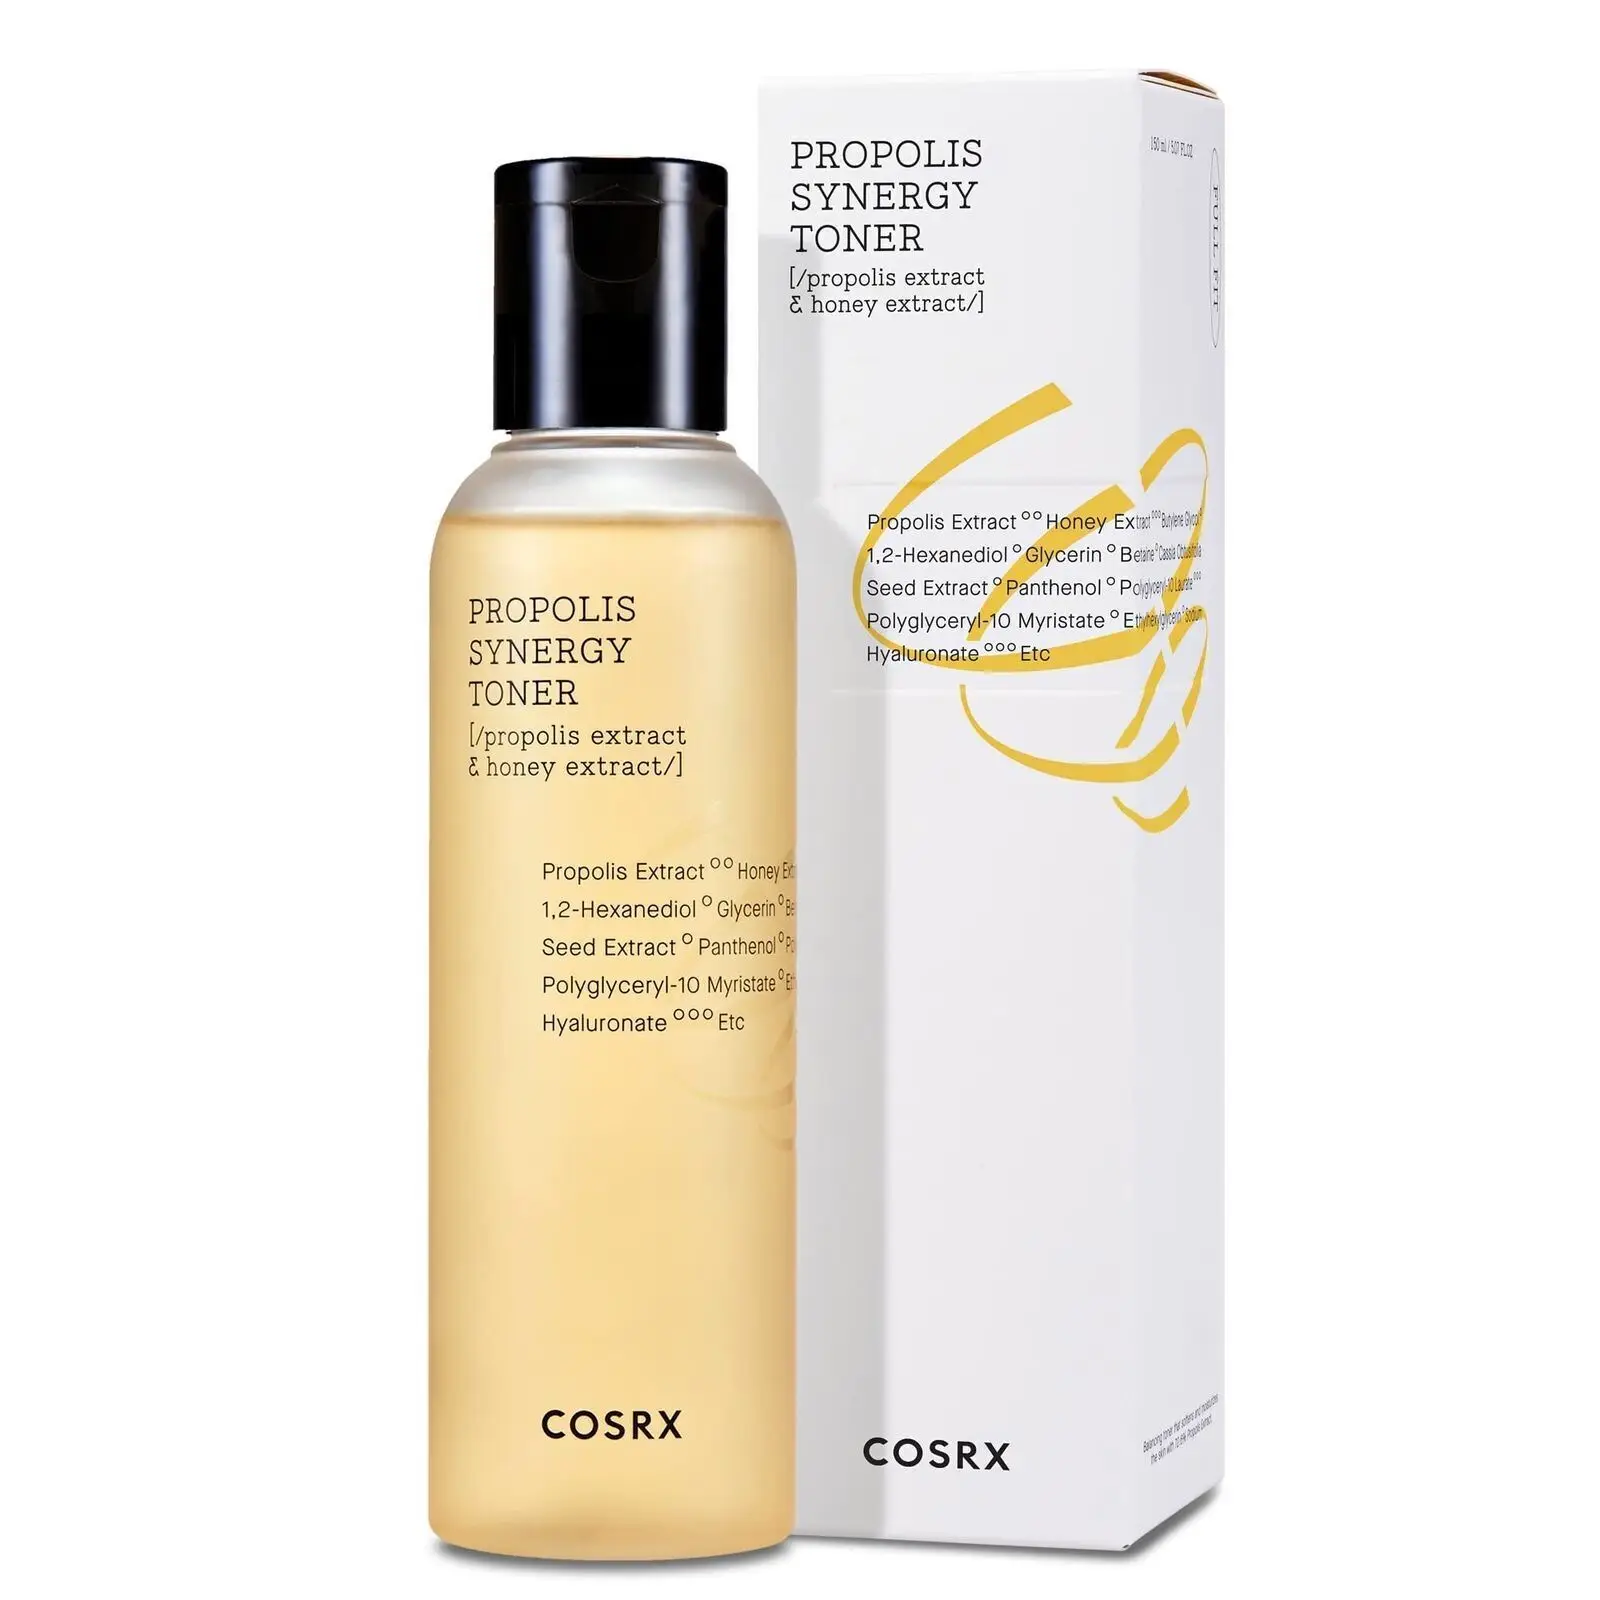 

COSRX Full Fit Propolis Synergy Toner Daily Boosting Moisturizing Shrink Pore Essence Water Hydrating Korean Skin Care 280ml